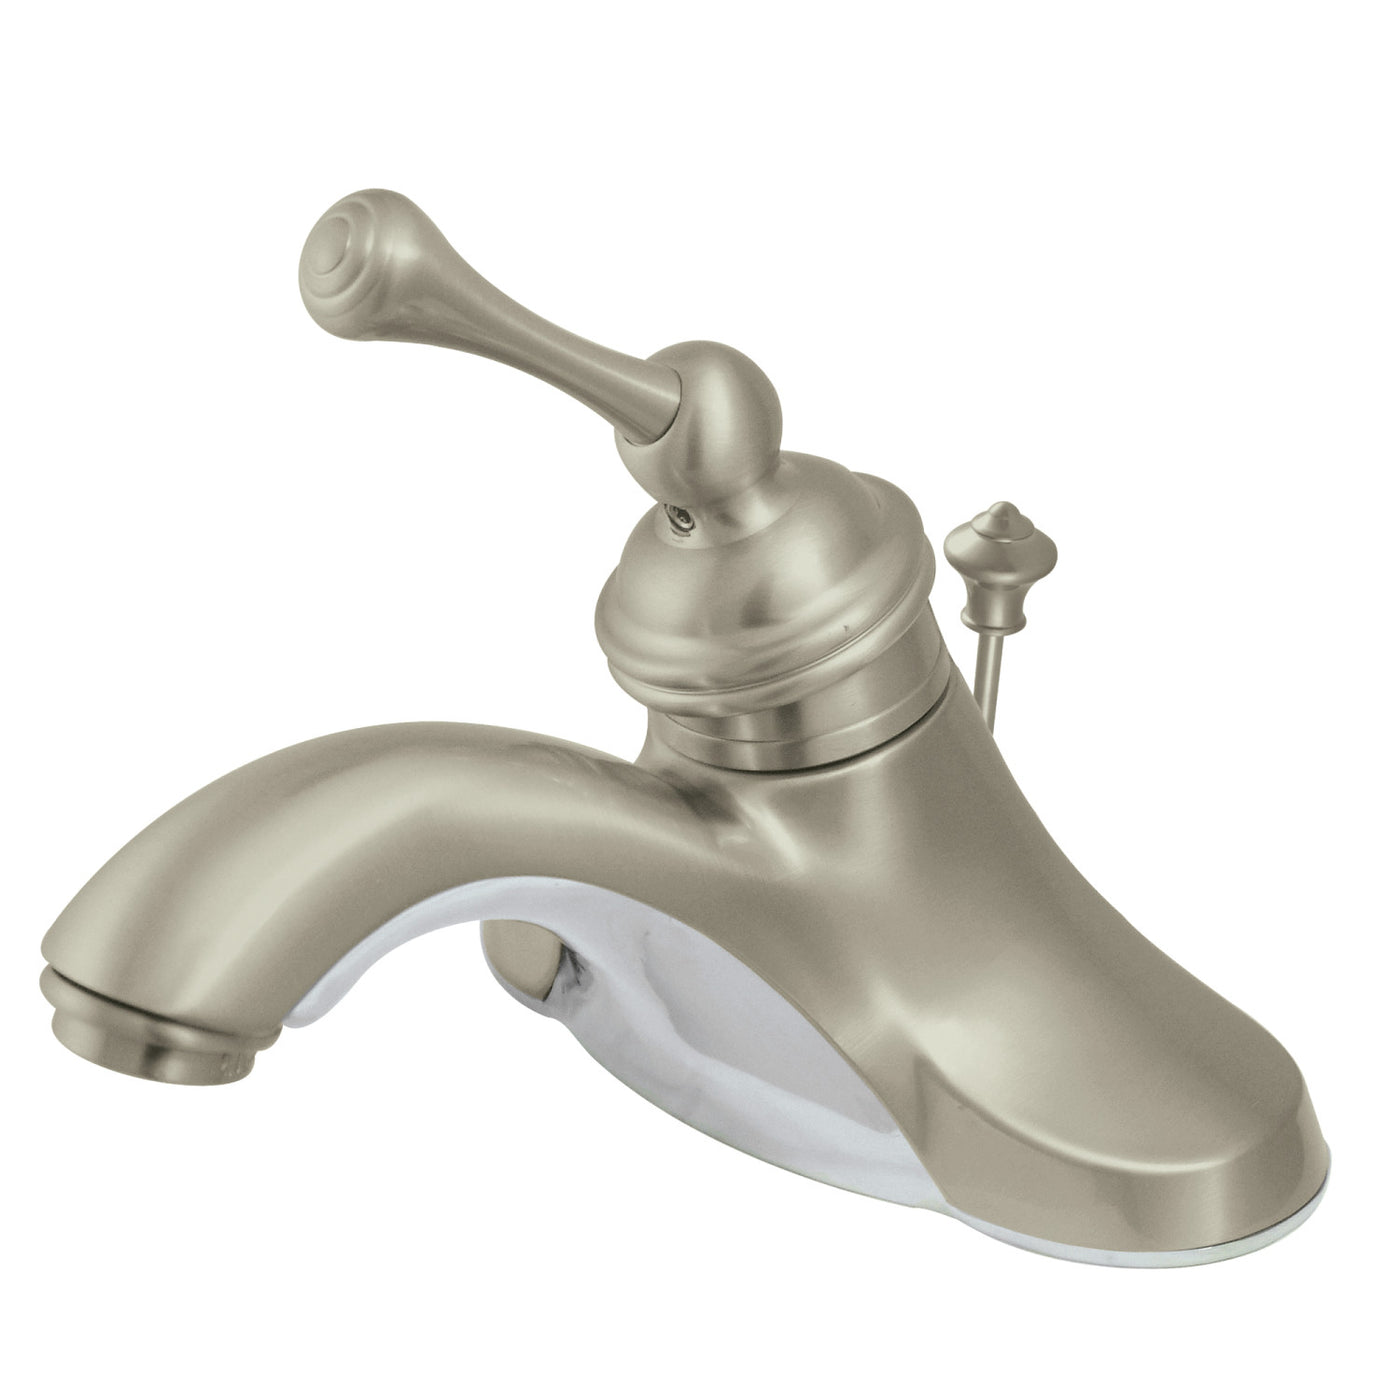 Elements of Design EB3548BL 4-Inch Centerset Bathroom Faucet, Brushed Nickel